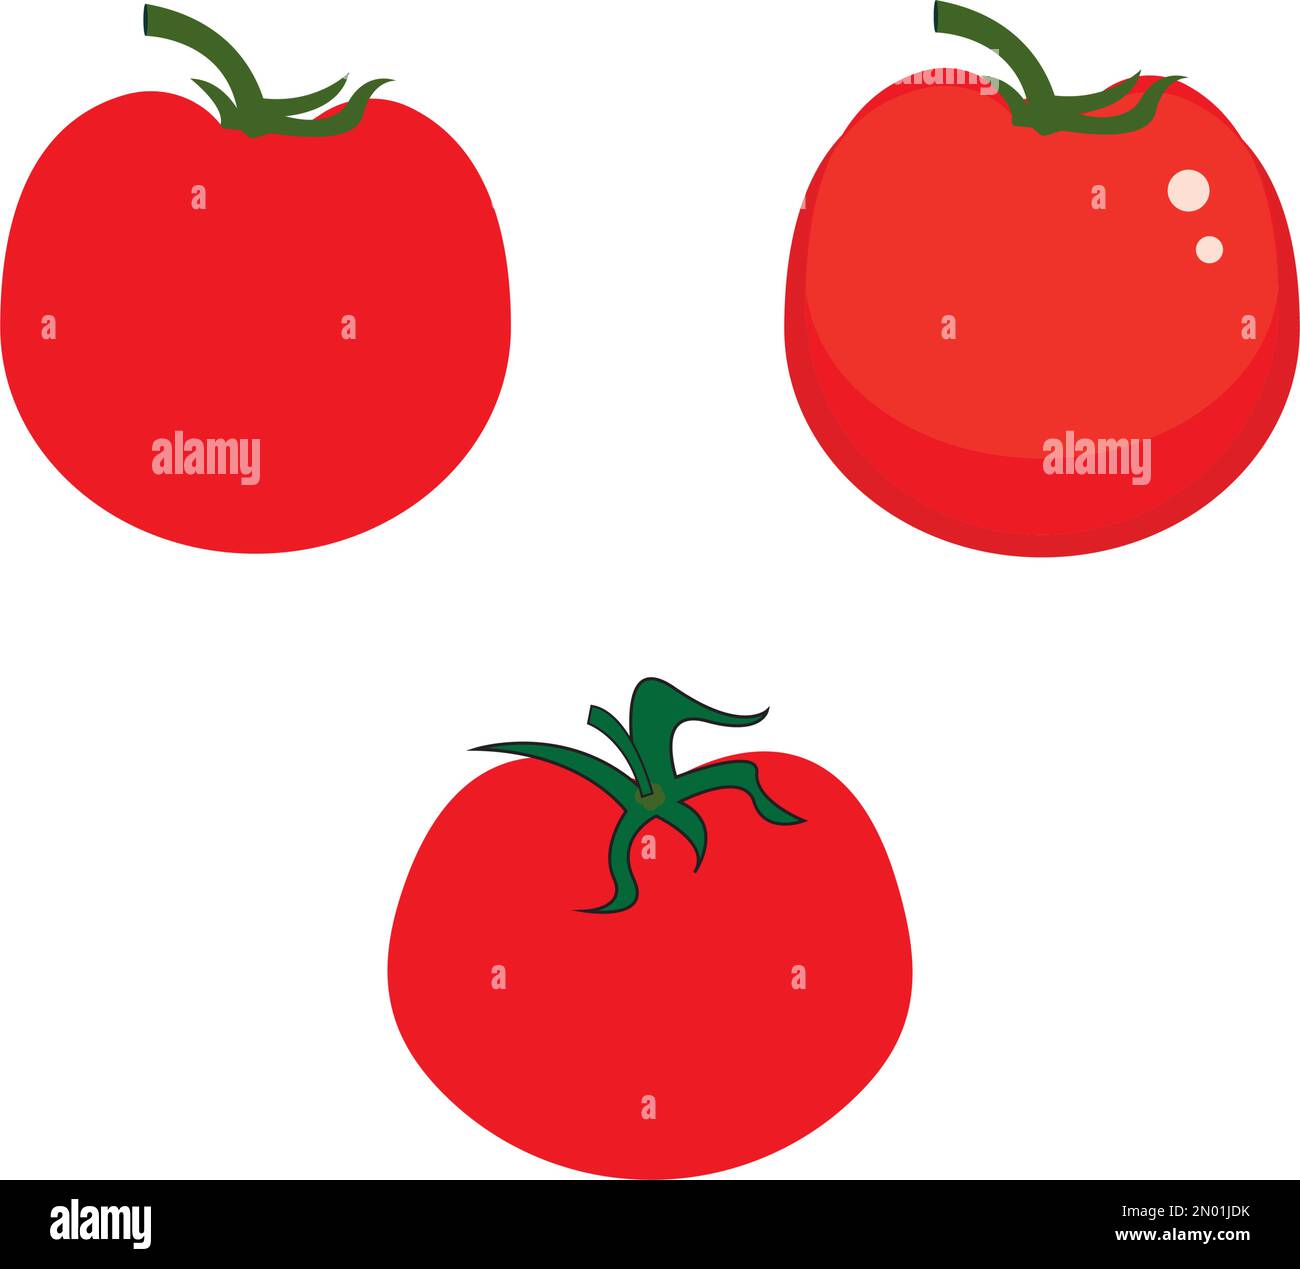 Tomato logo Stock Vector Images - Alamy